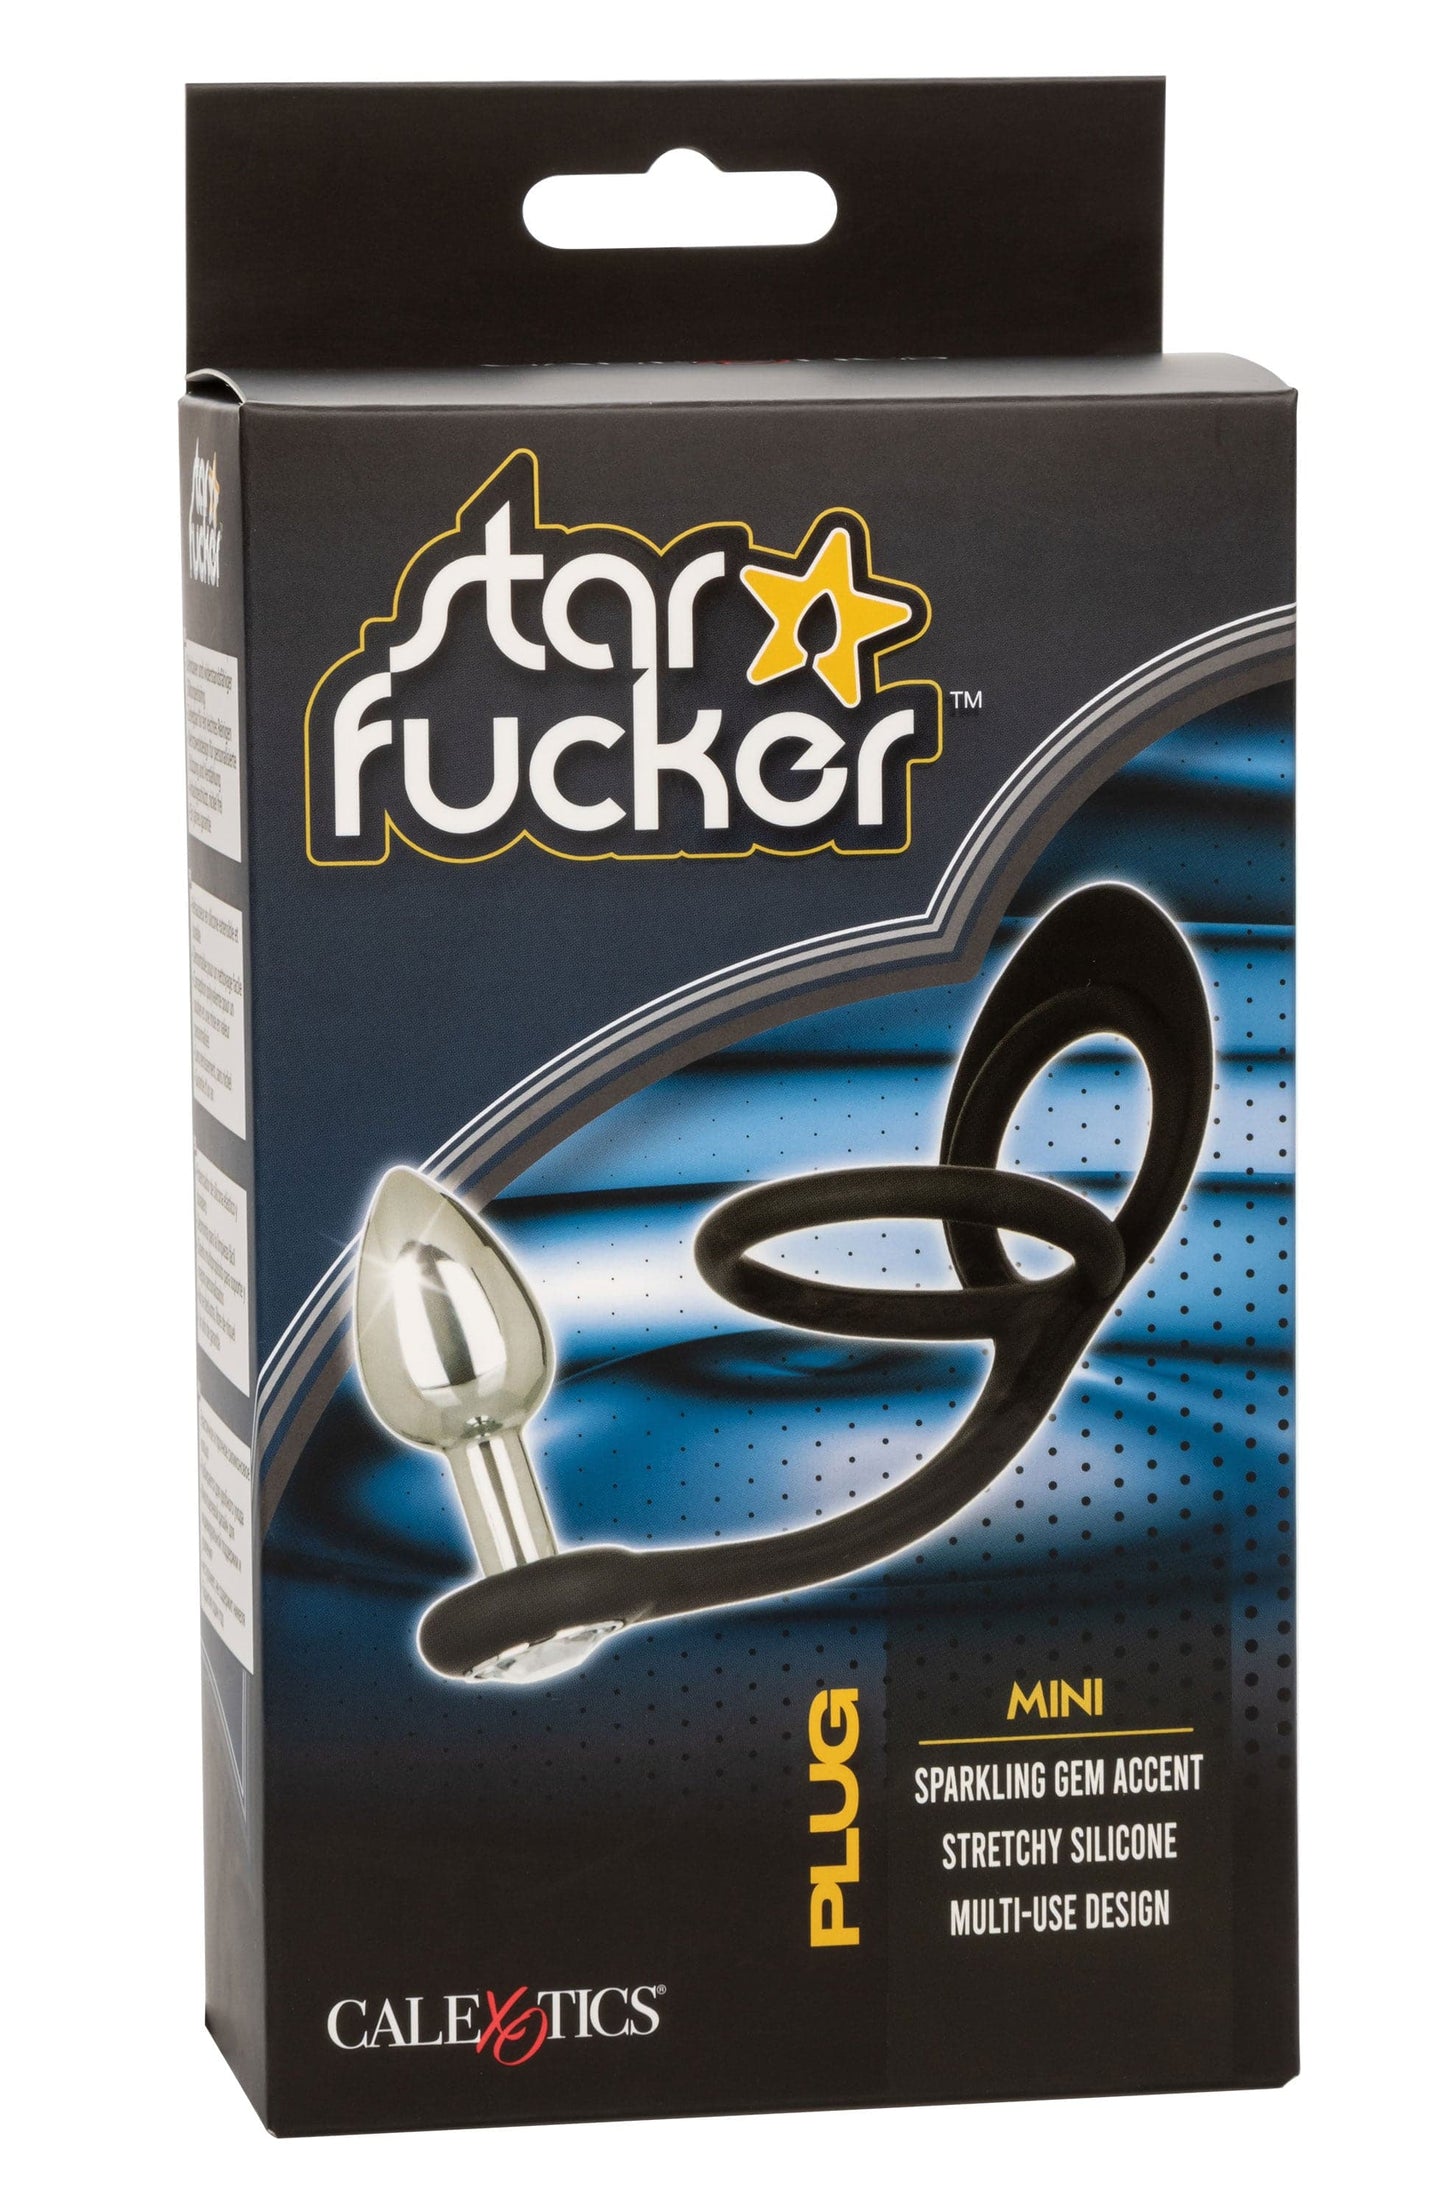 star fucker mini plug